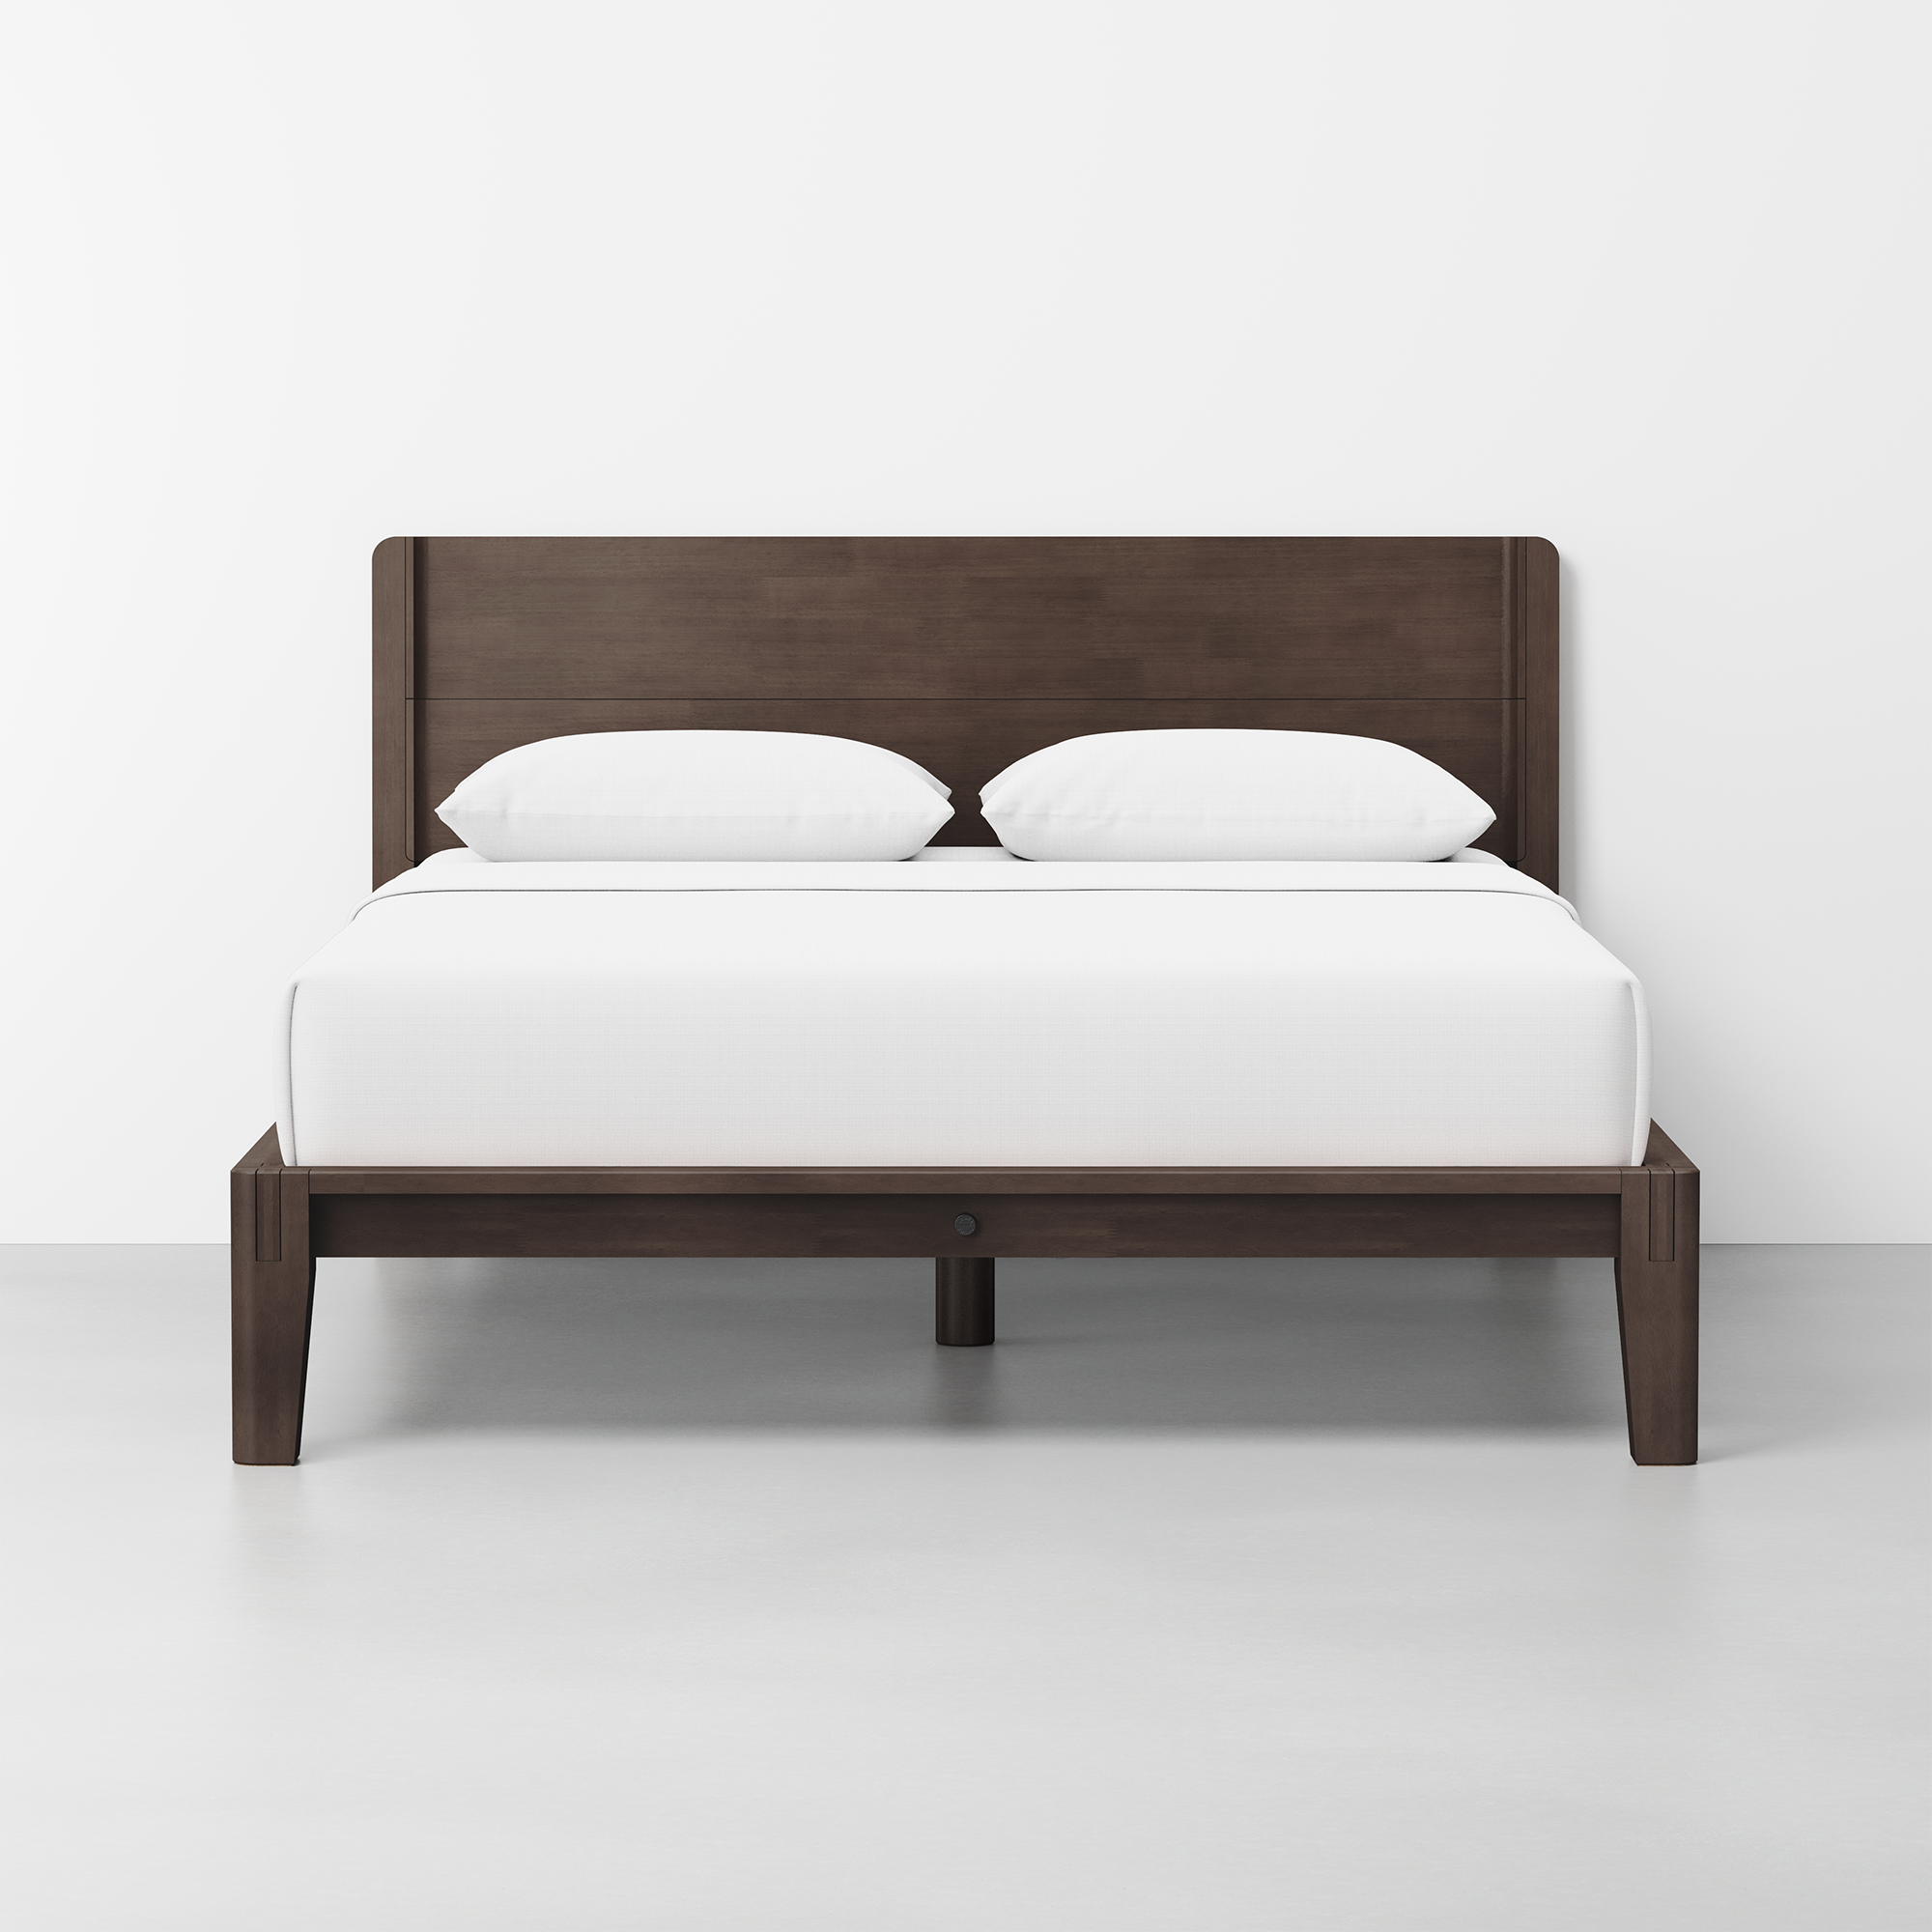 The Bed (Espresso / Headboard) - Render - Front